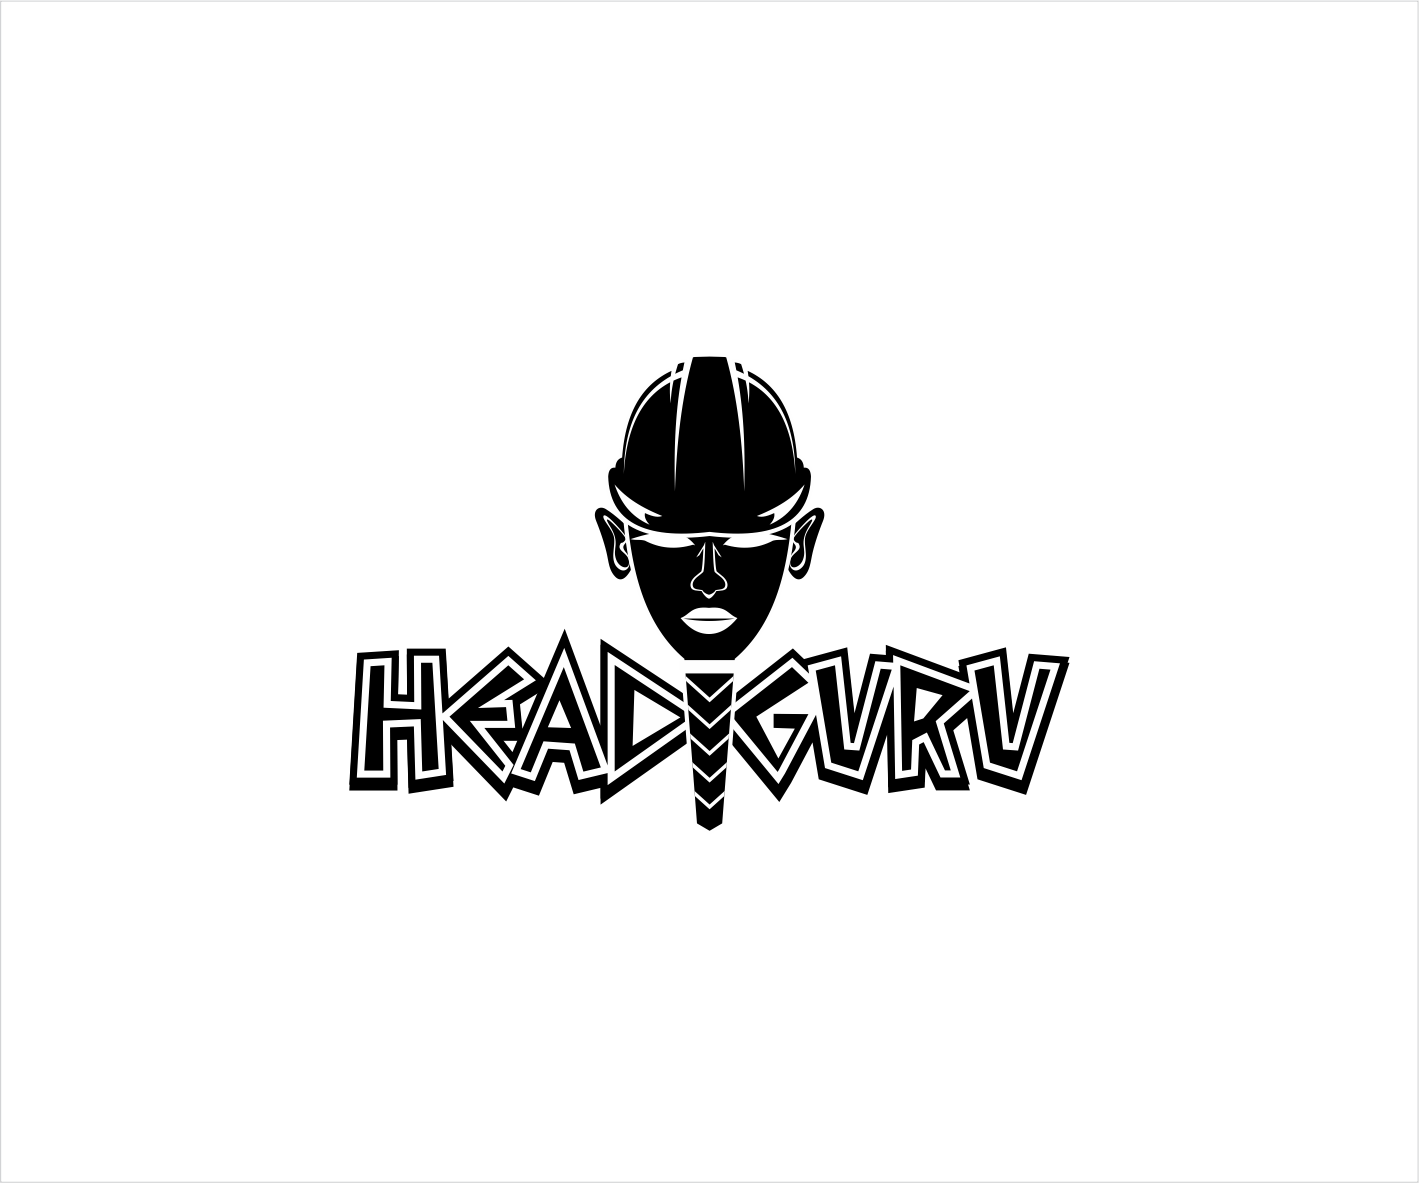 Eligant HG Logo - Elegant, Playful Logo Design for I would like it to say Head Guru or